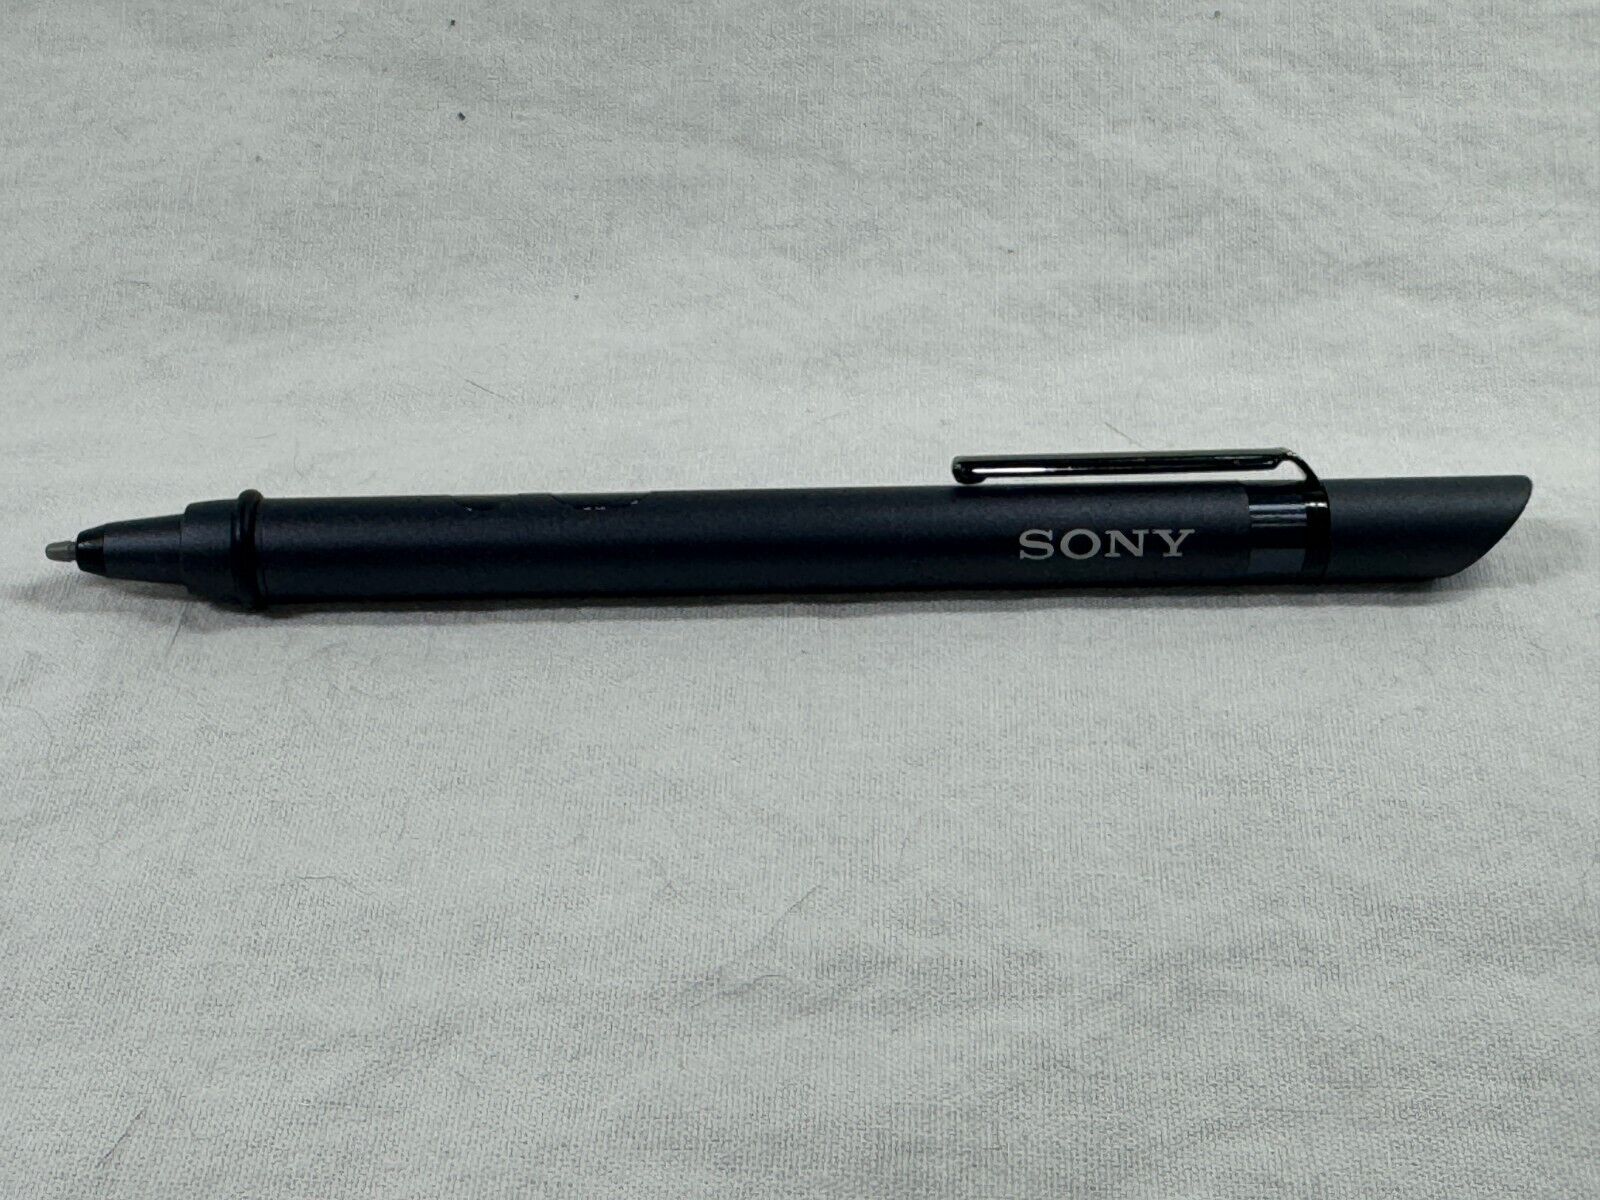 SONY Digitizer stylus Pen VGP-STD2 OEM